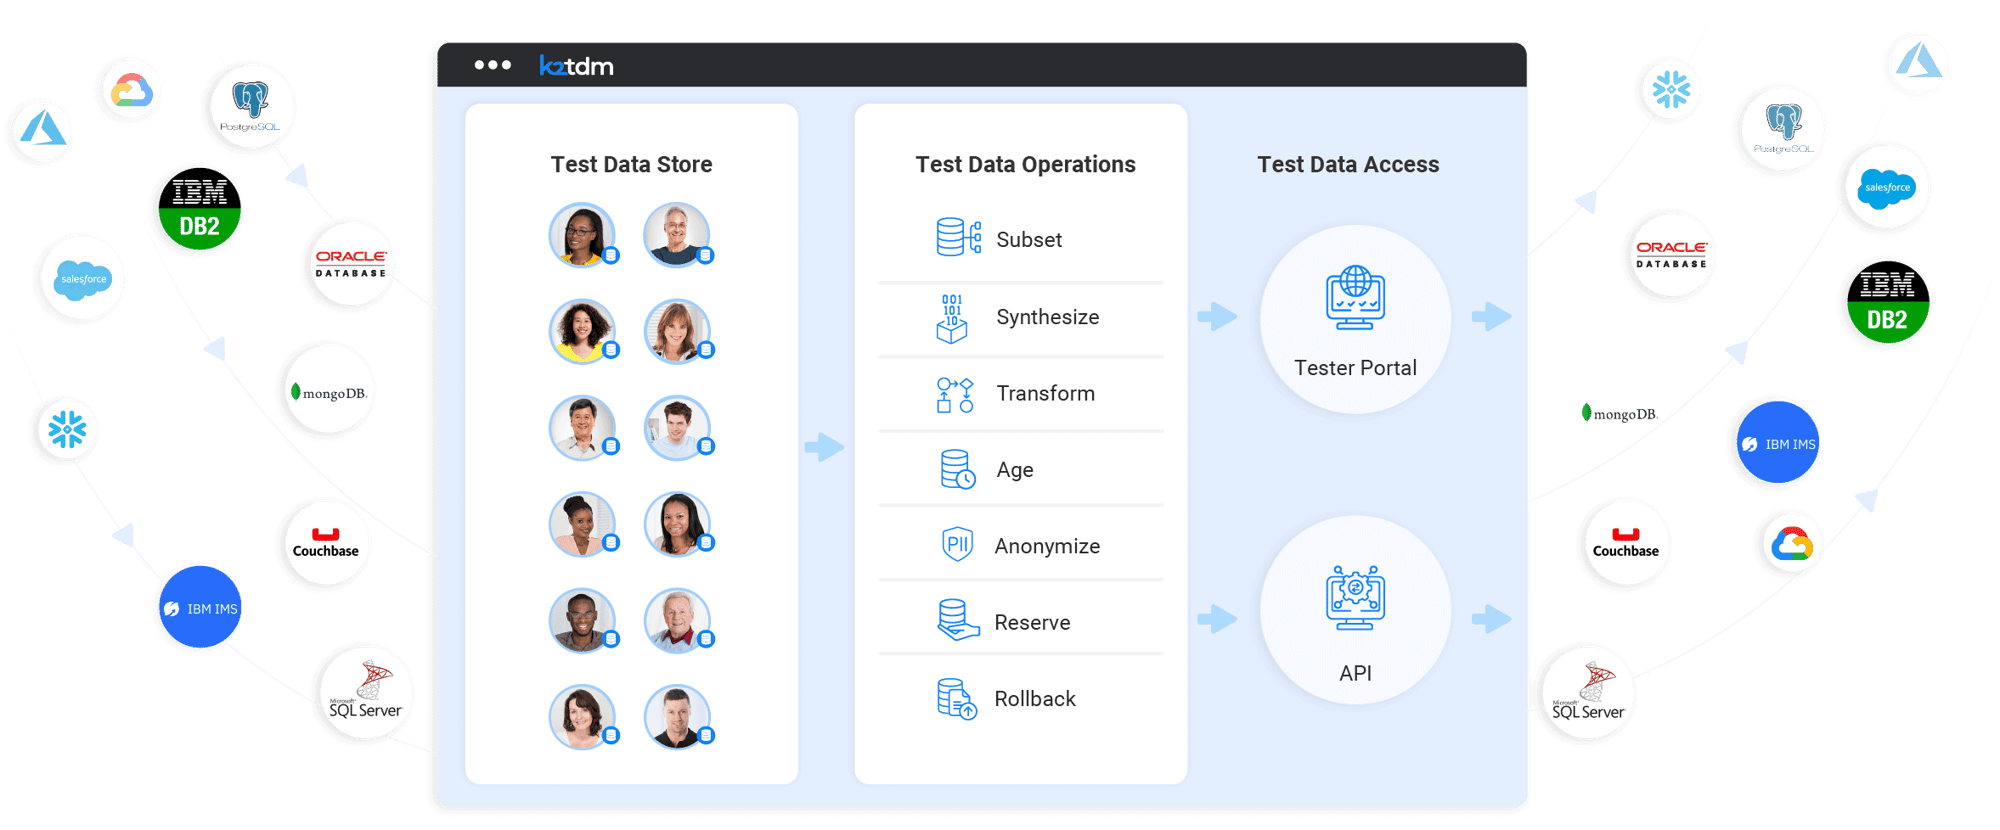 Test data management tools